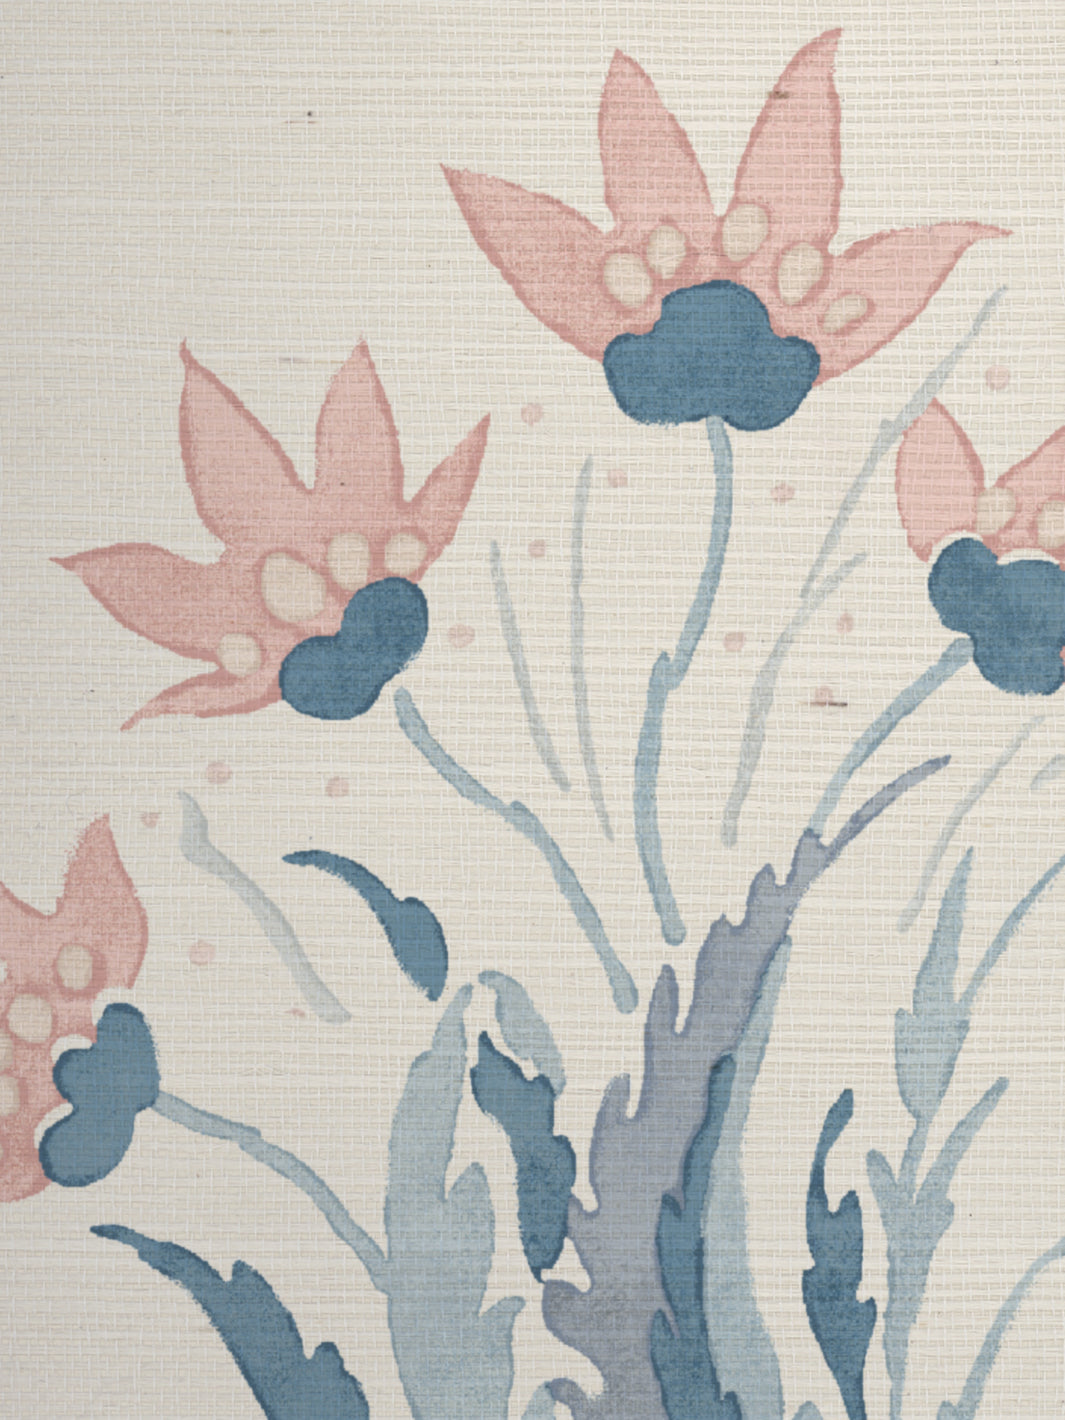 'Hillhouse Block Print Large' Grasscloth Wallpaper by Nathan Turner - Pink Blue